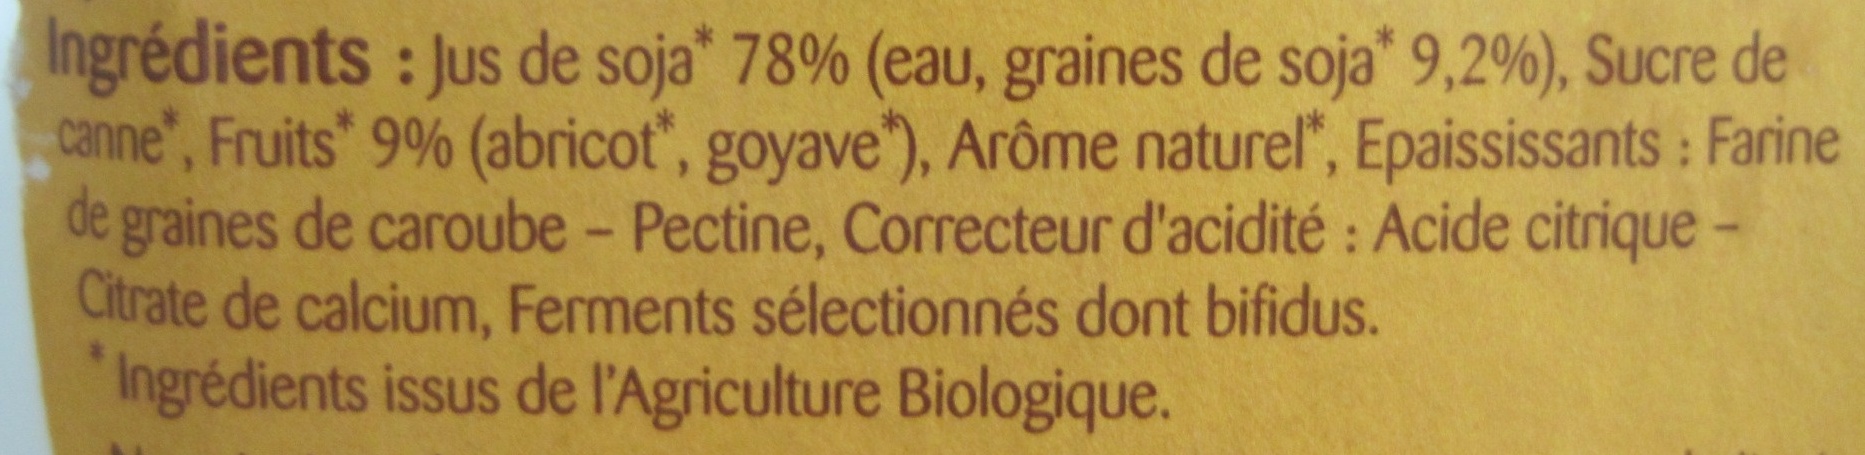 Sojadélice Abricot Goyave - Ingredients - fr